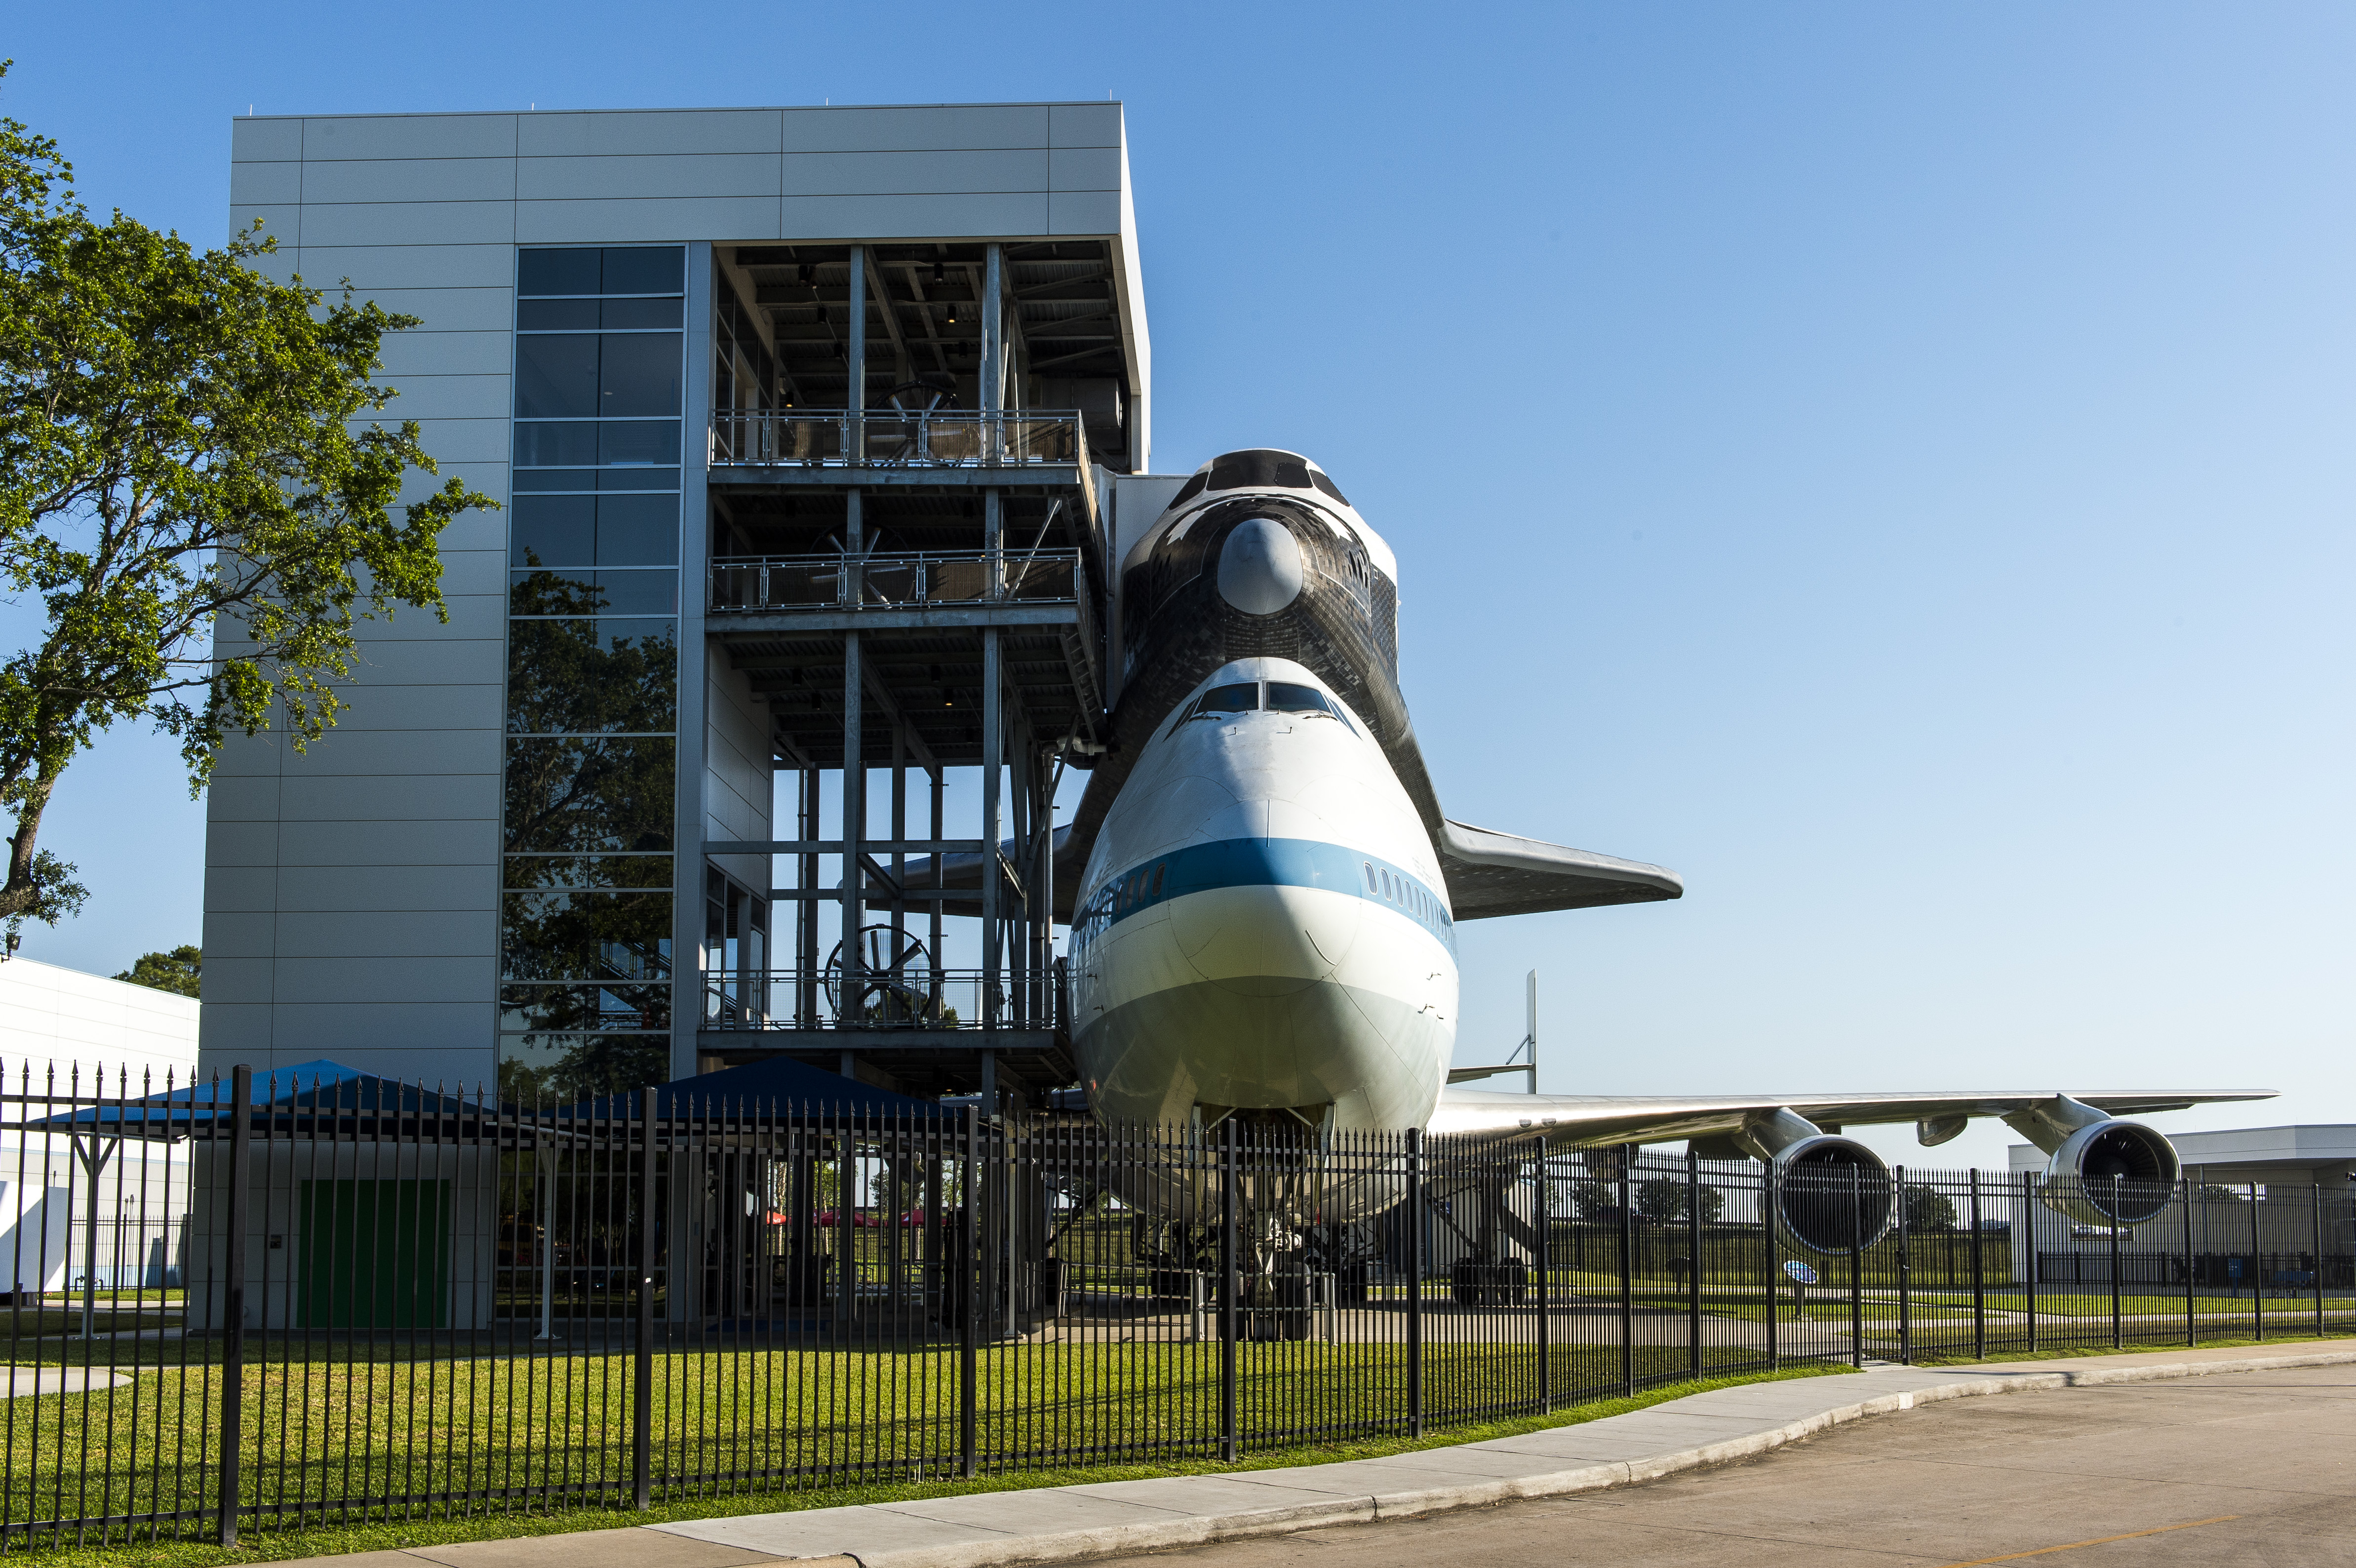 Space City Houston – Point 506